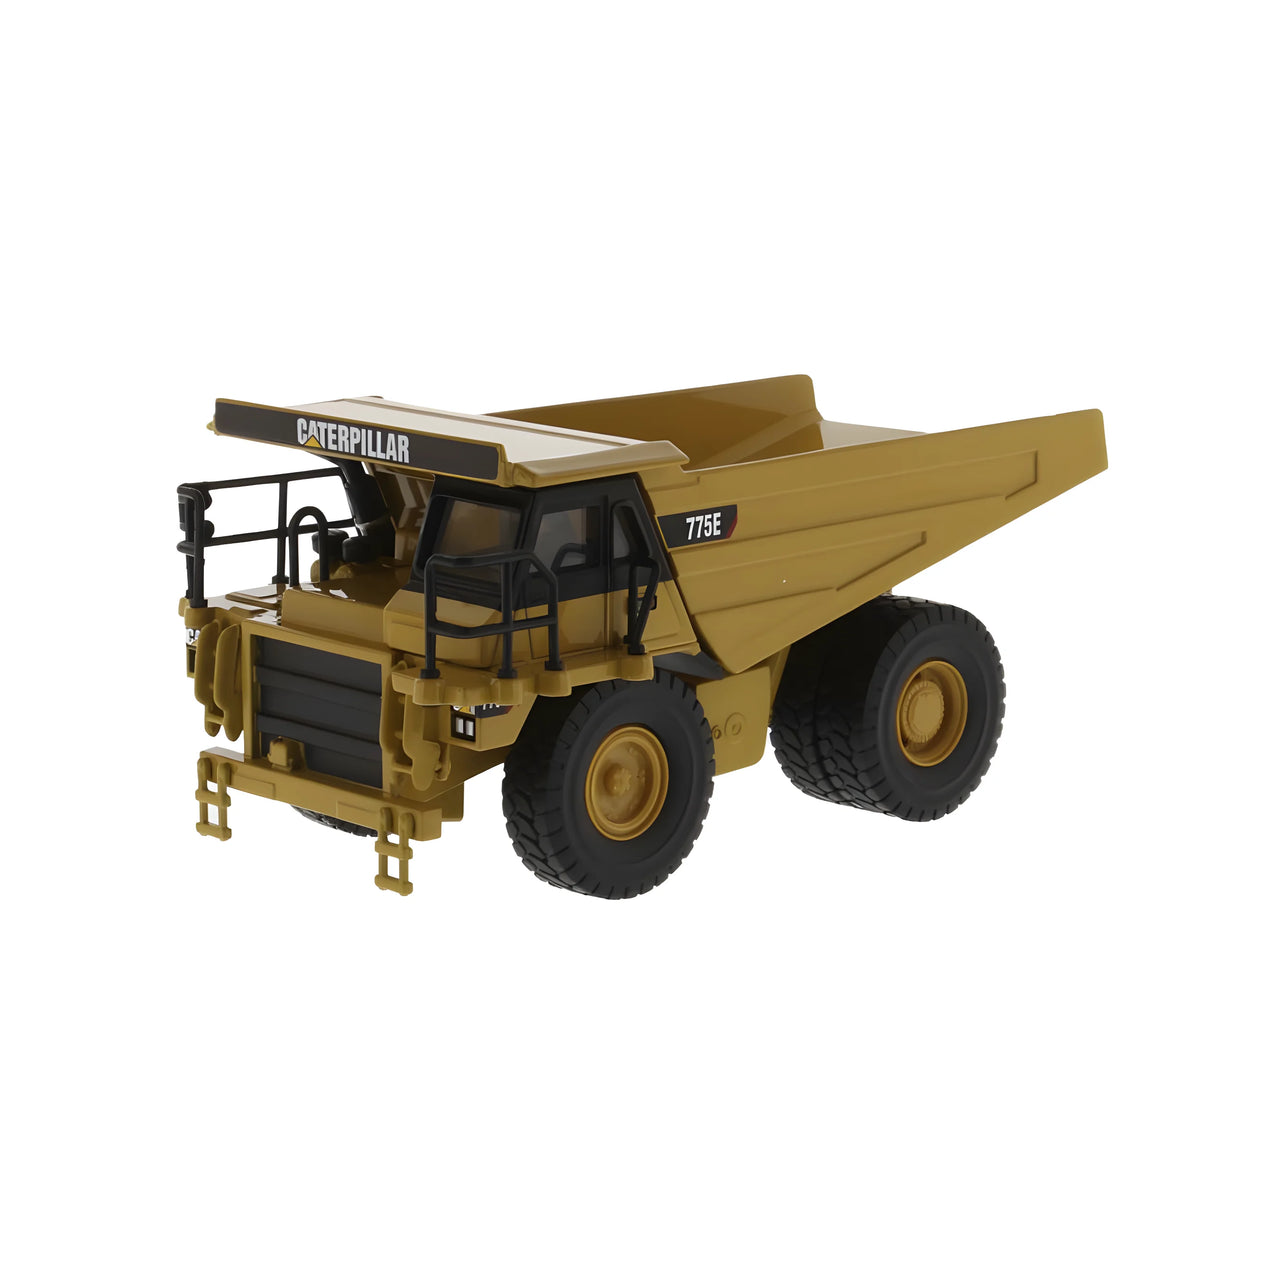 85616 Caterpillar 775E Mining Truck Scale 1:64 (Discontinued Model)